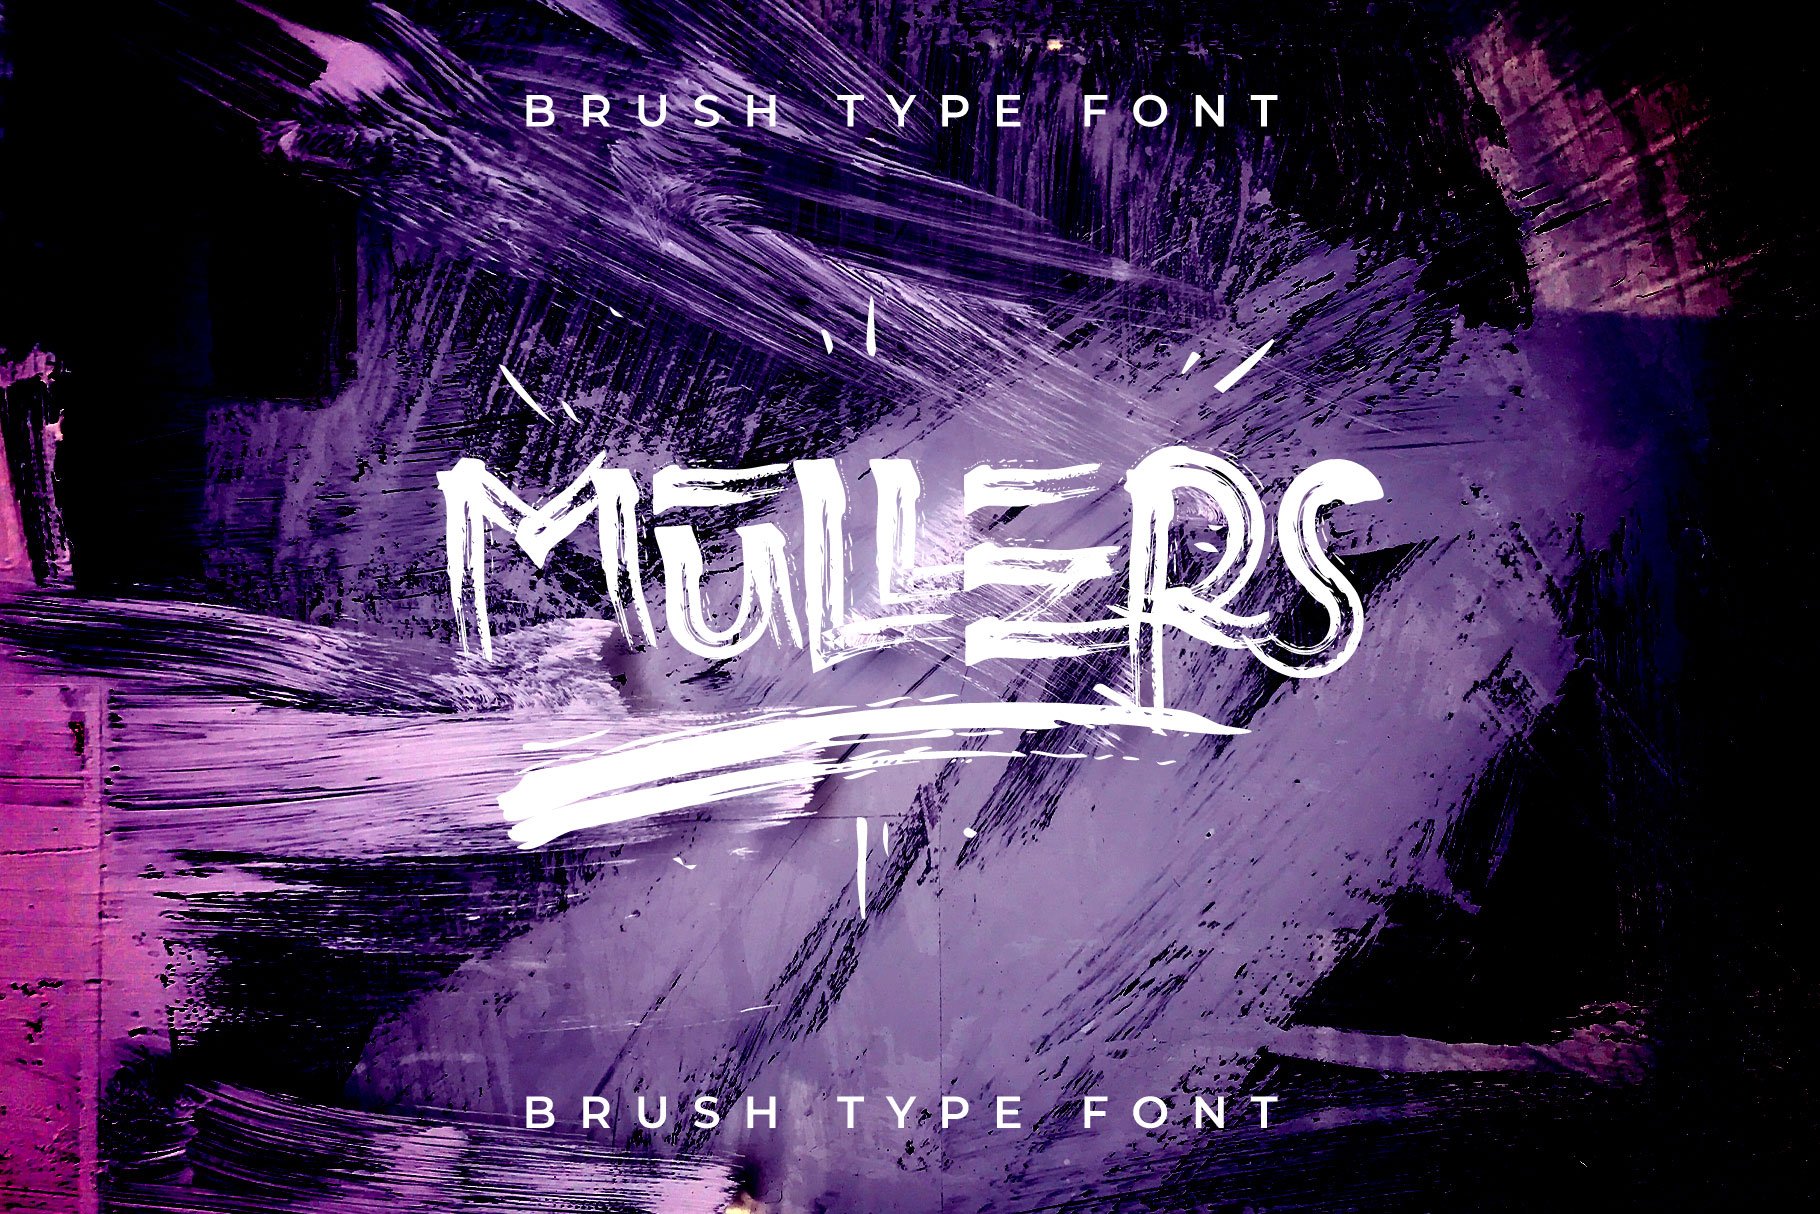 Mullers Brusher - Font Brush cover image.